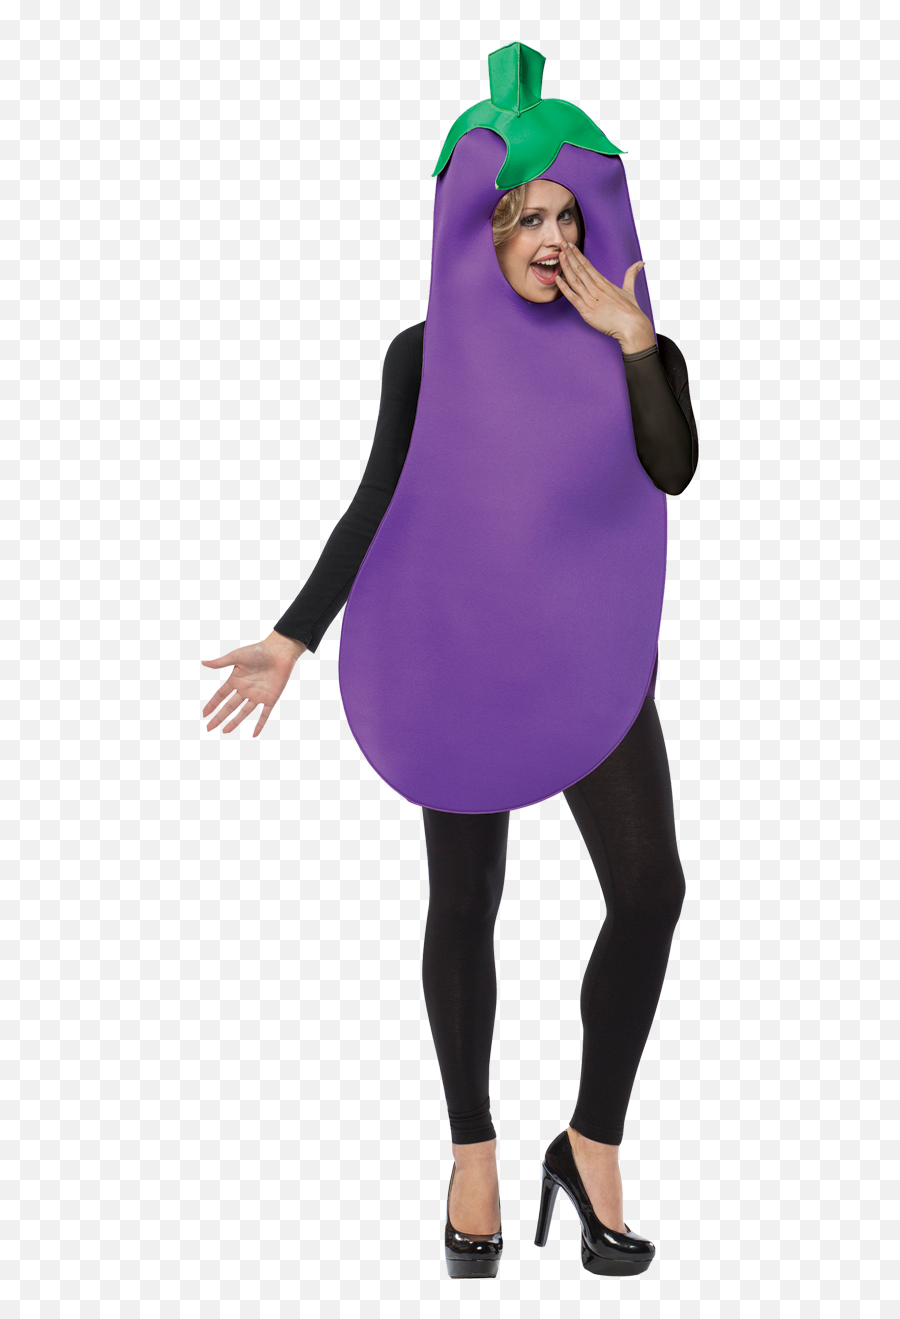 Details About Adult Aubergine Eggplant Emoji Food Novelty Funny Fancy Dress Costume - Aubergine Costume,Vegetable Emoji